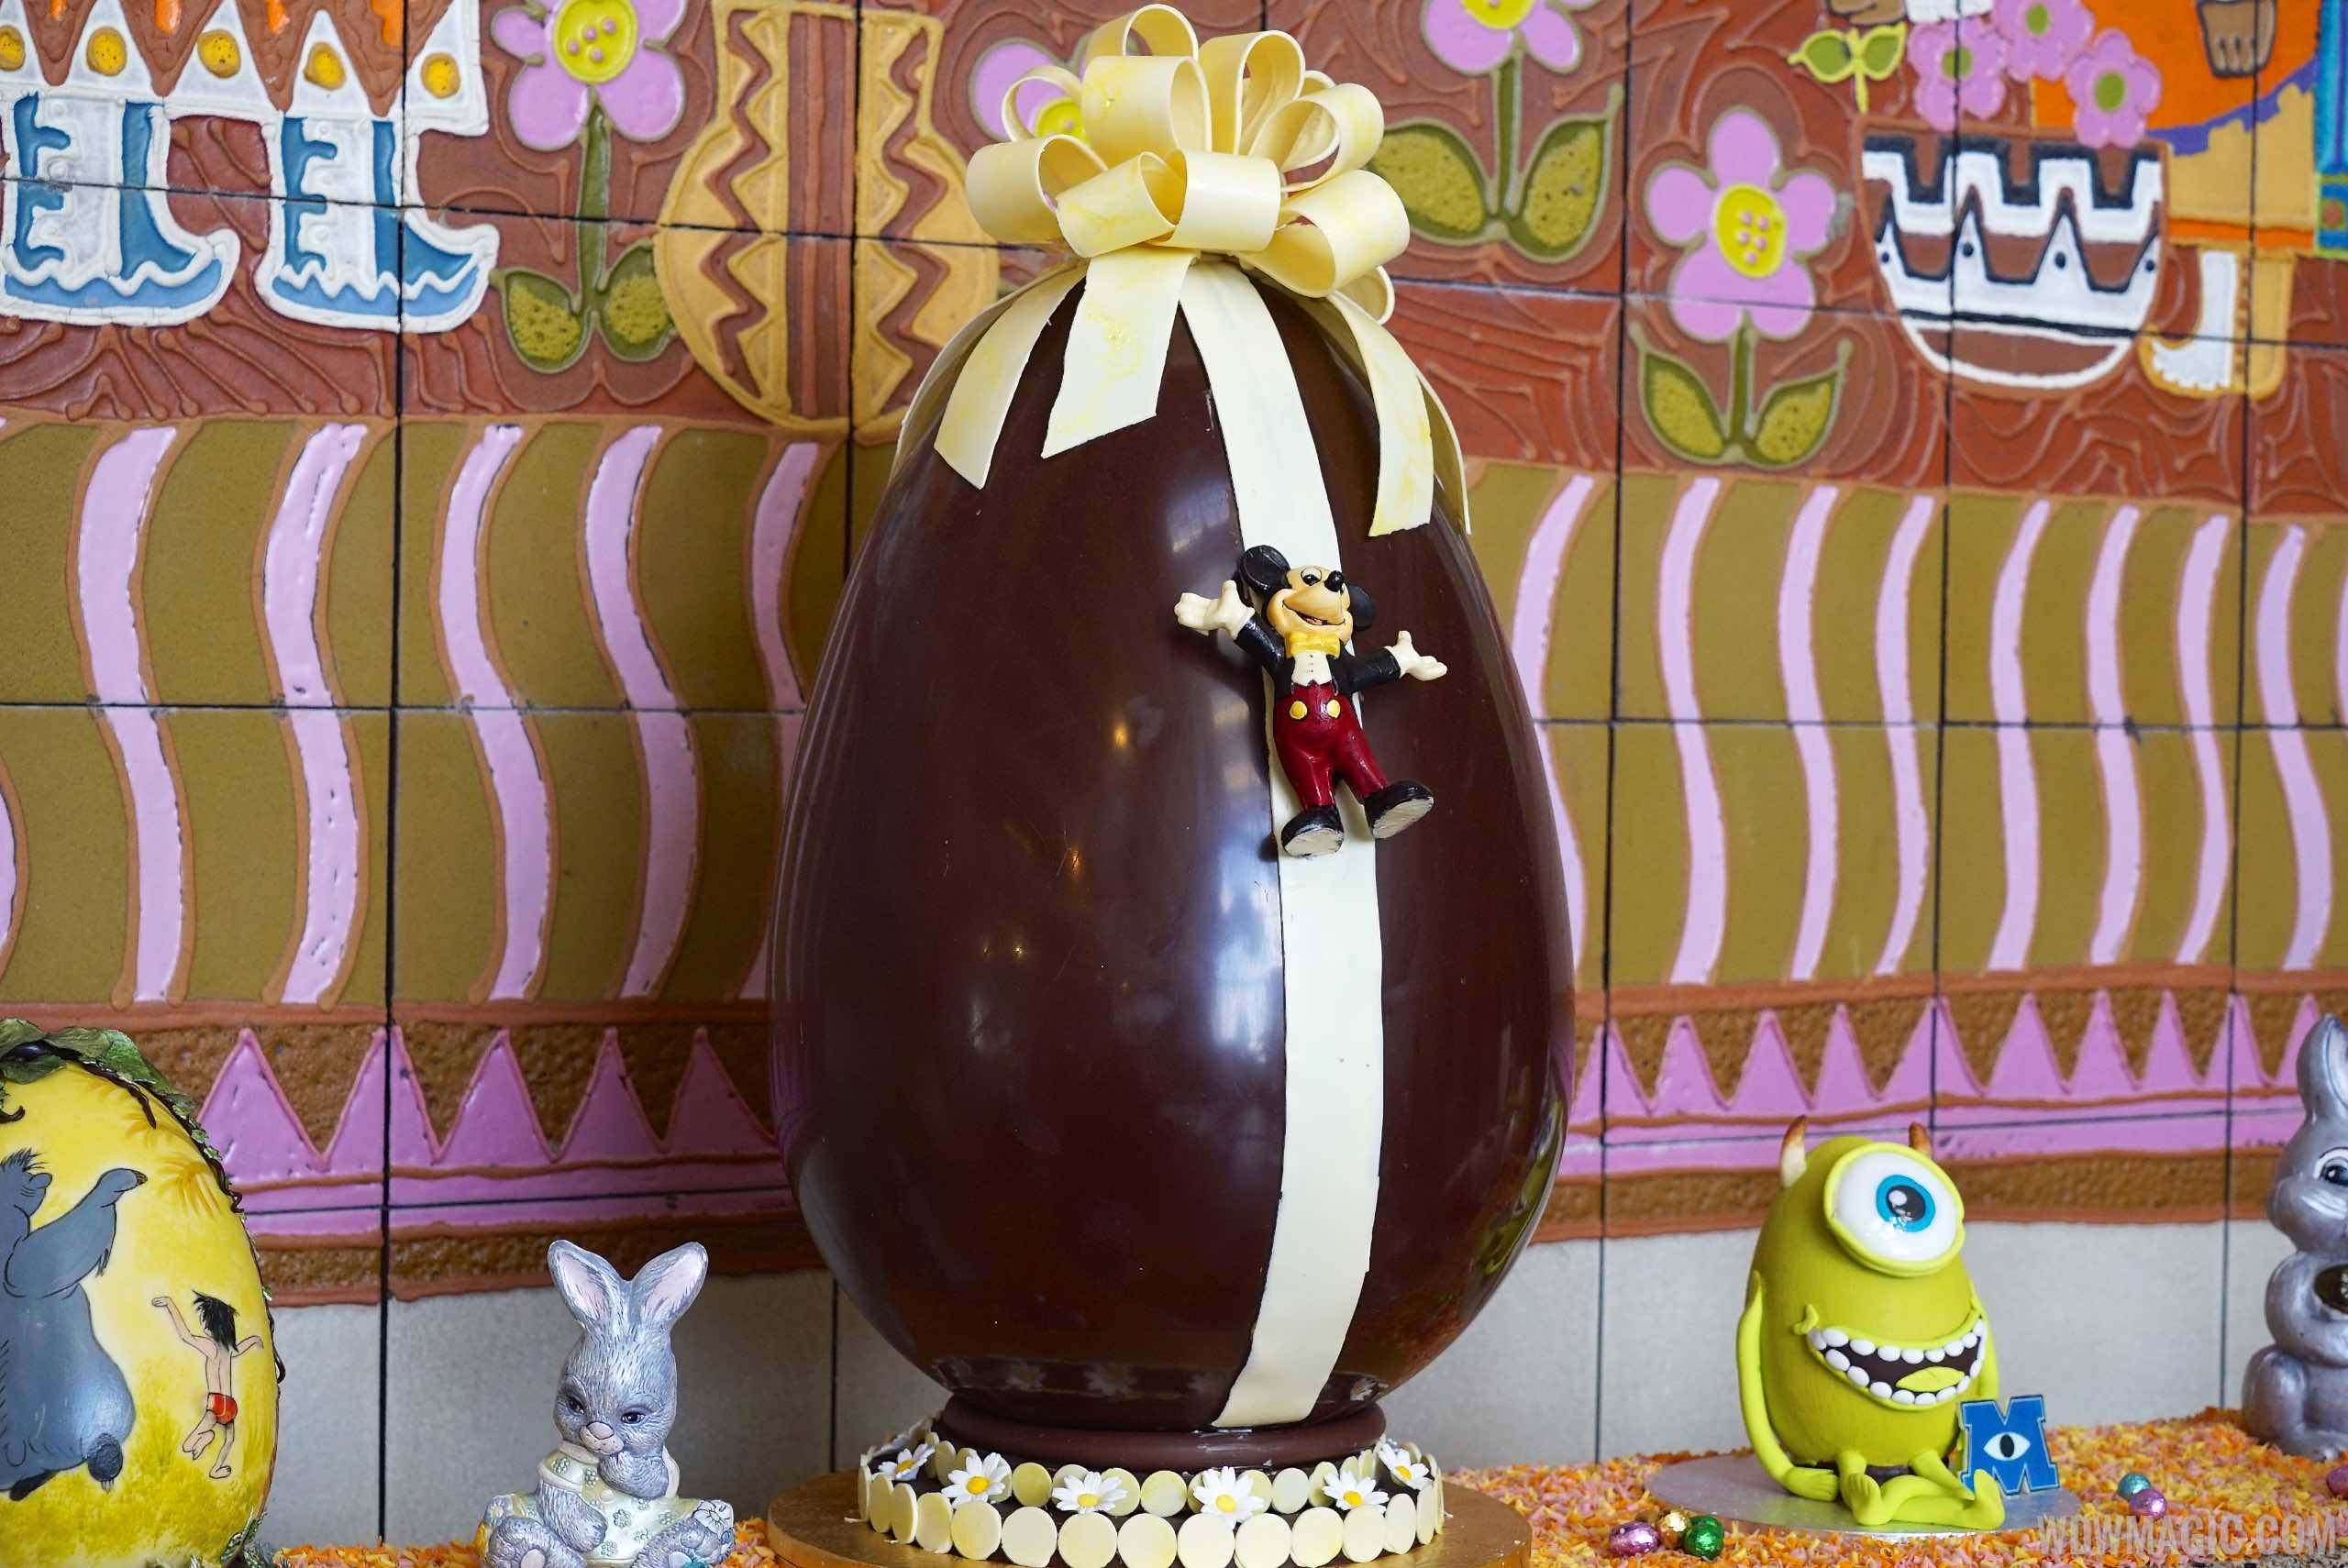 Disney's Contemporary Resort 2015 Easter Egg display